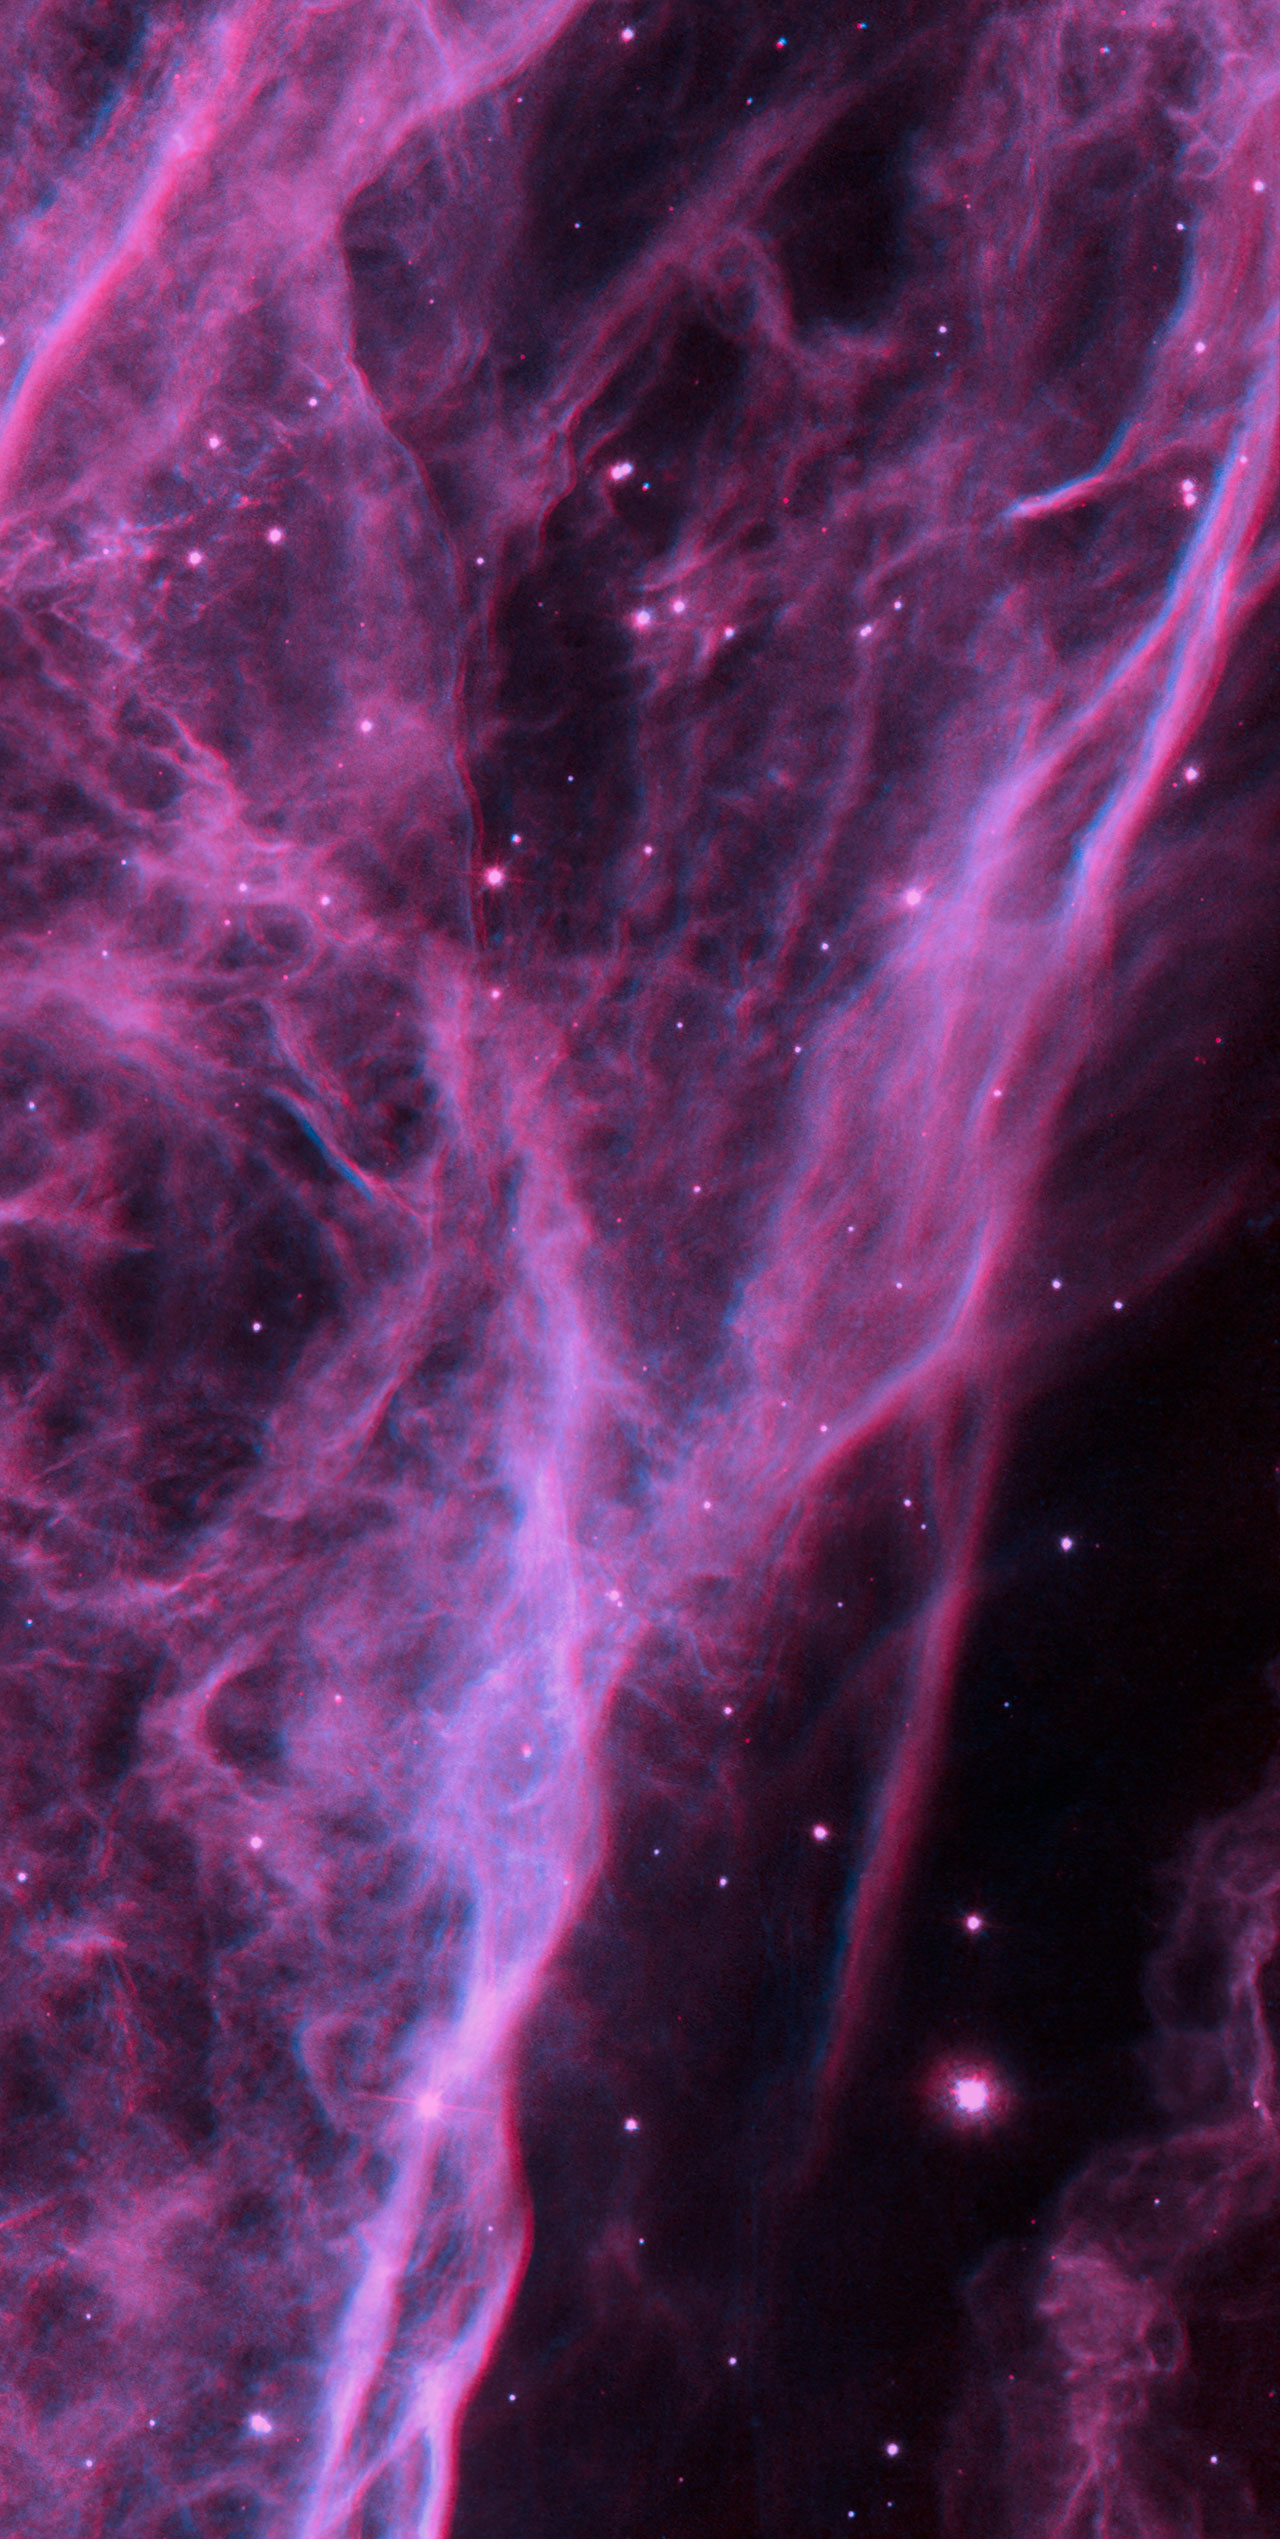 3D image of the Veil Nebula